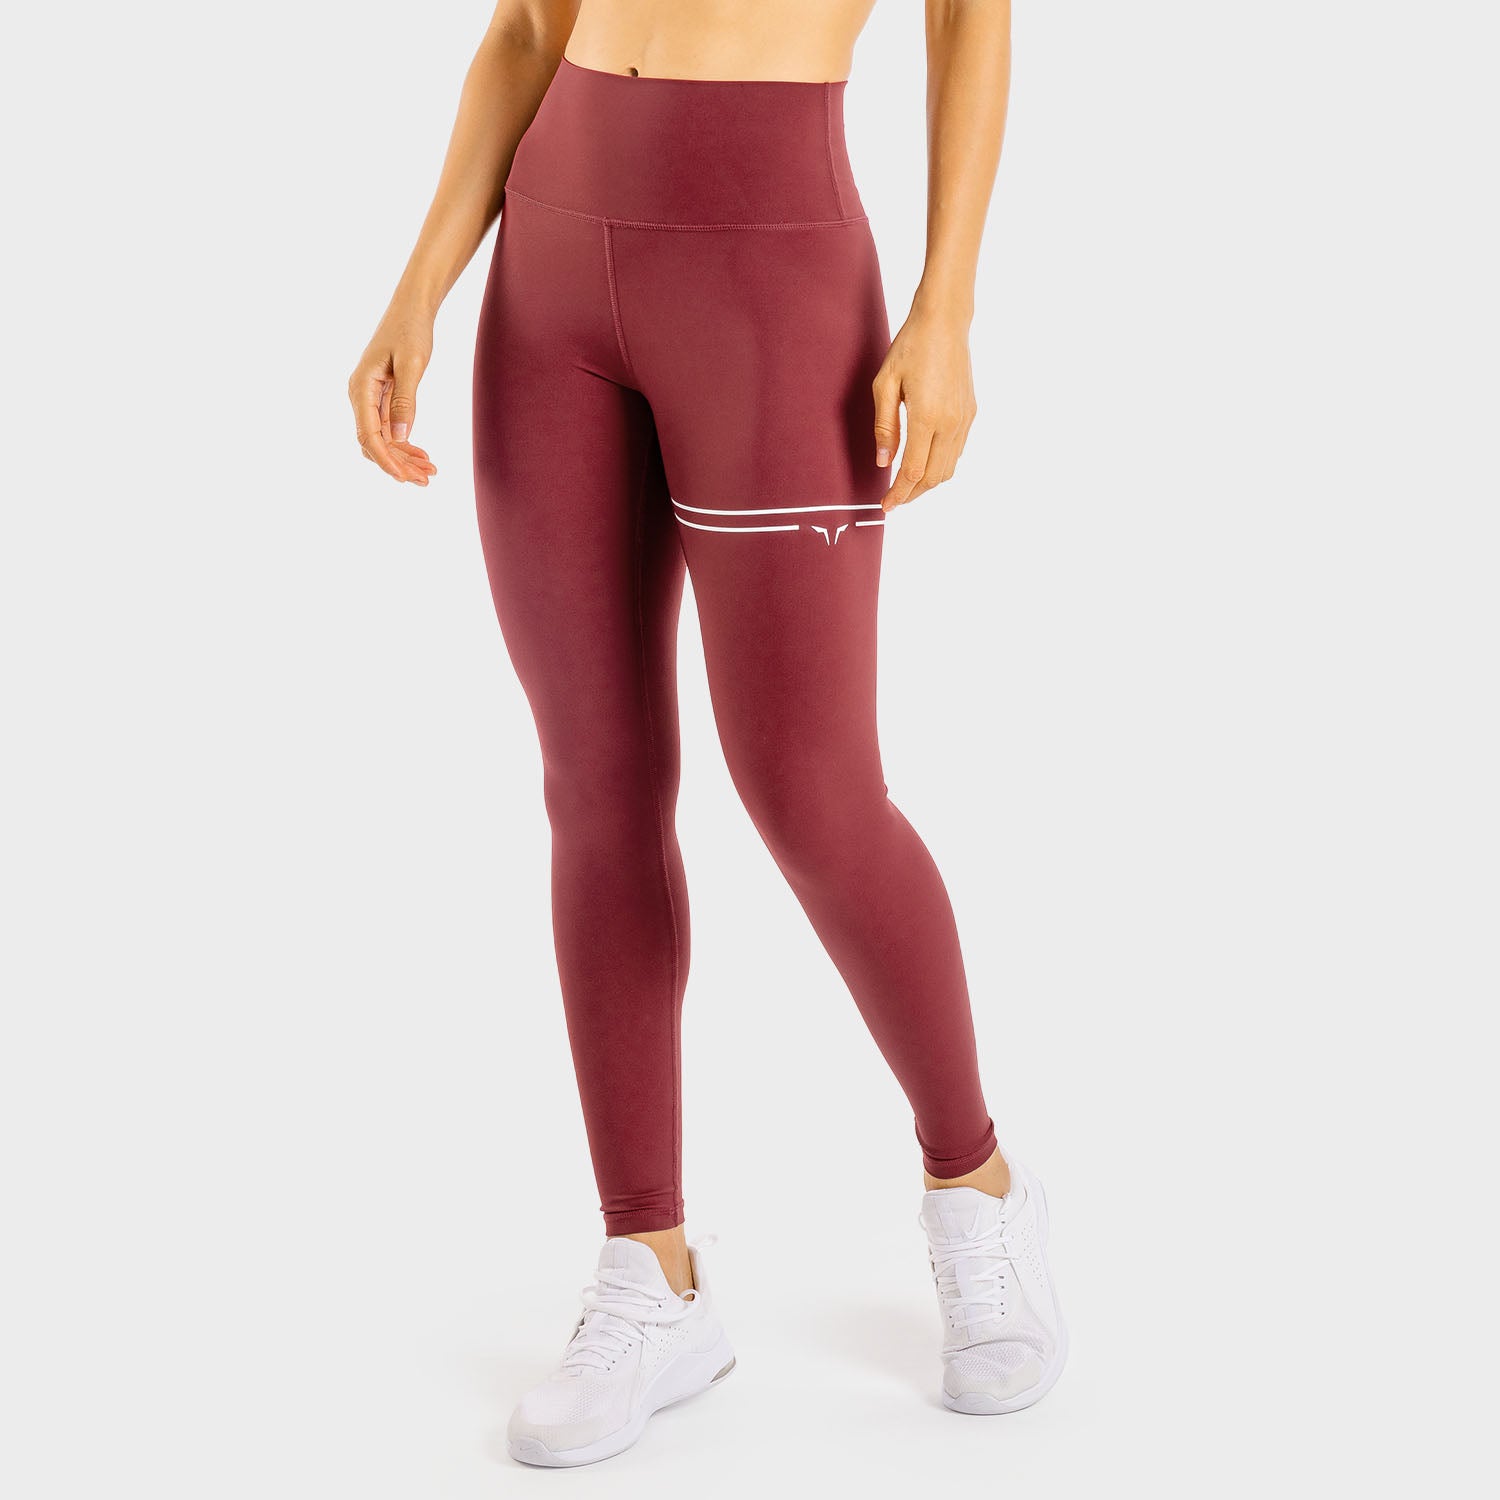 squatwolf-workout-clothes-flux-leggings-maroon-gym-leggings-for-women